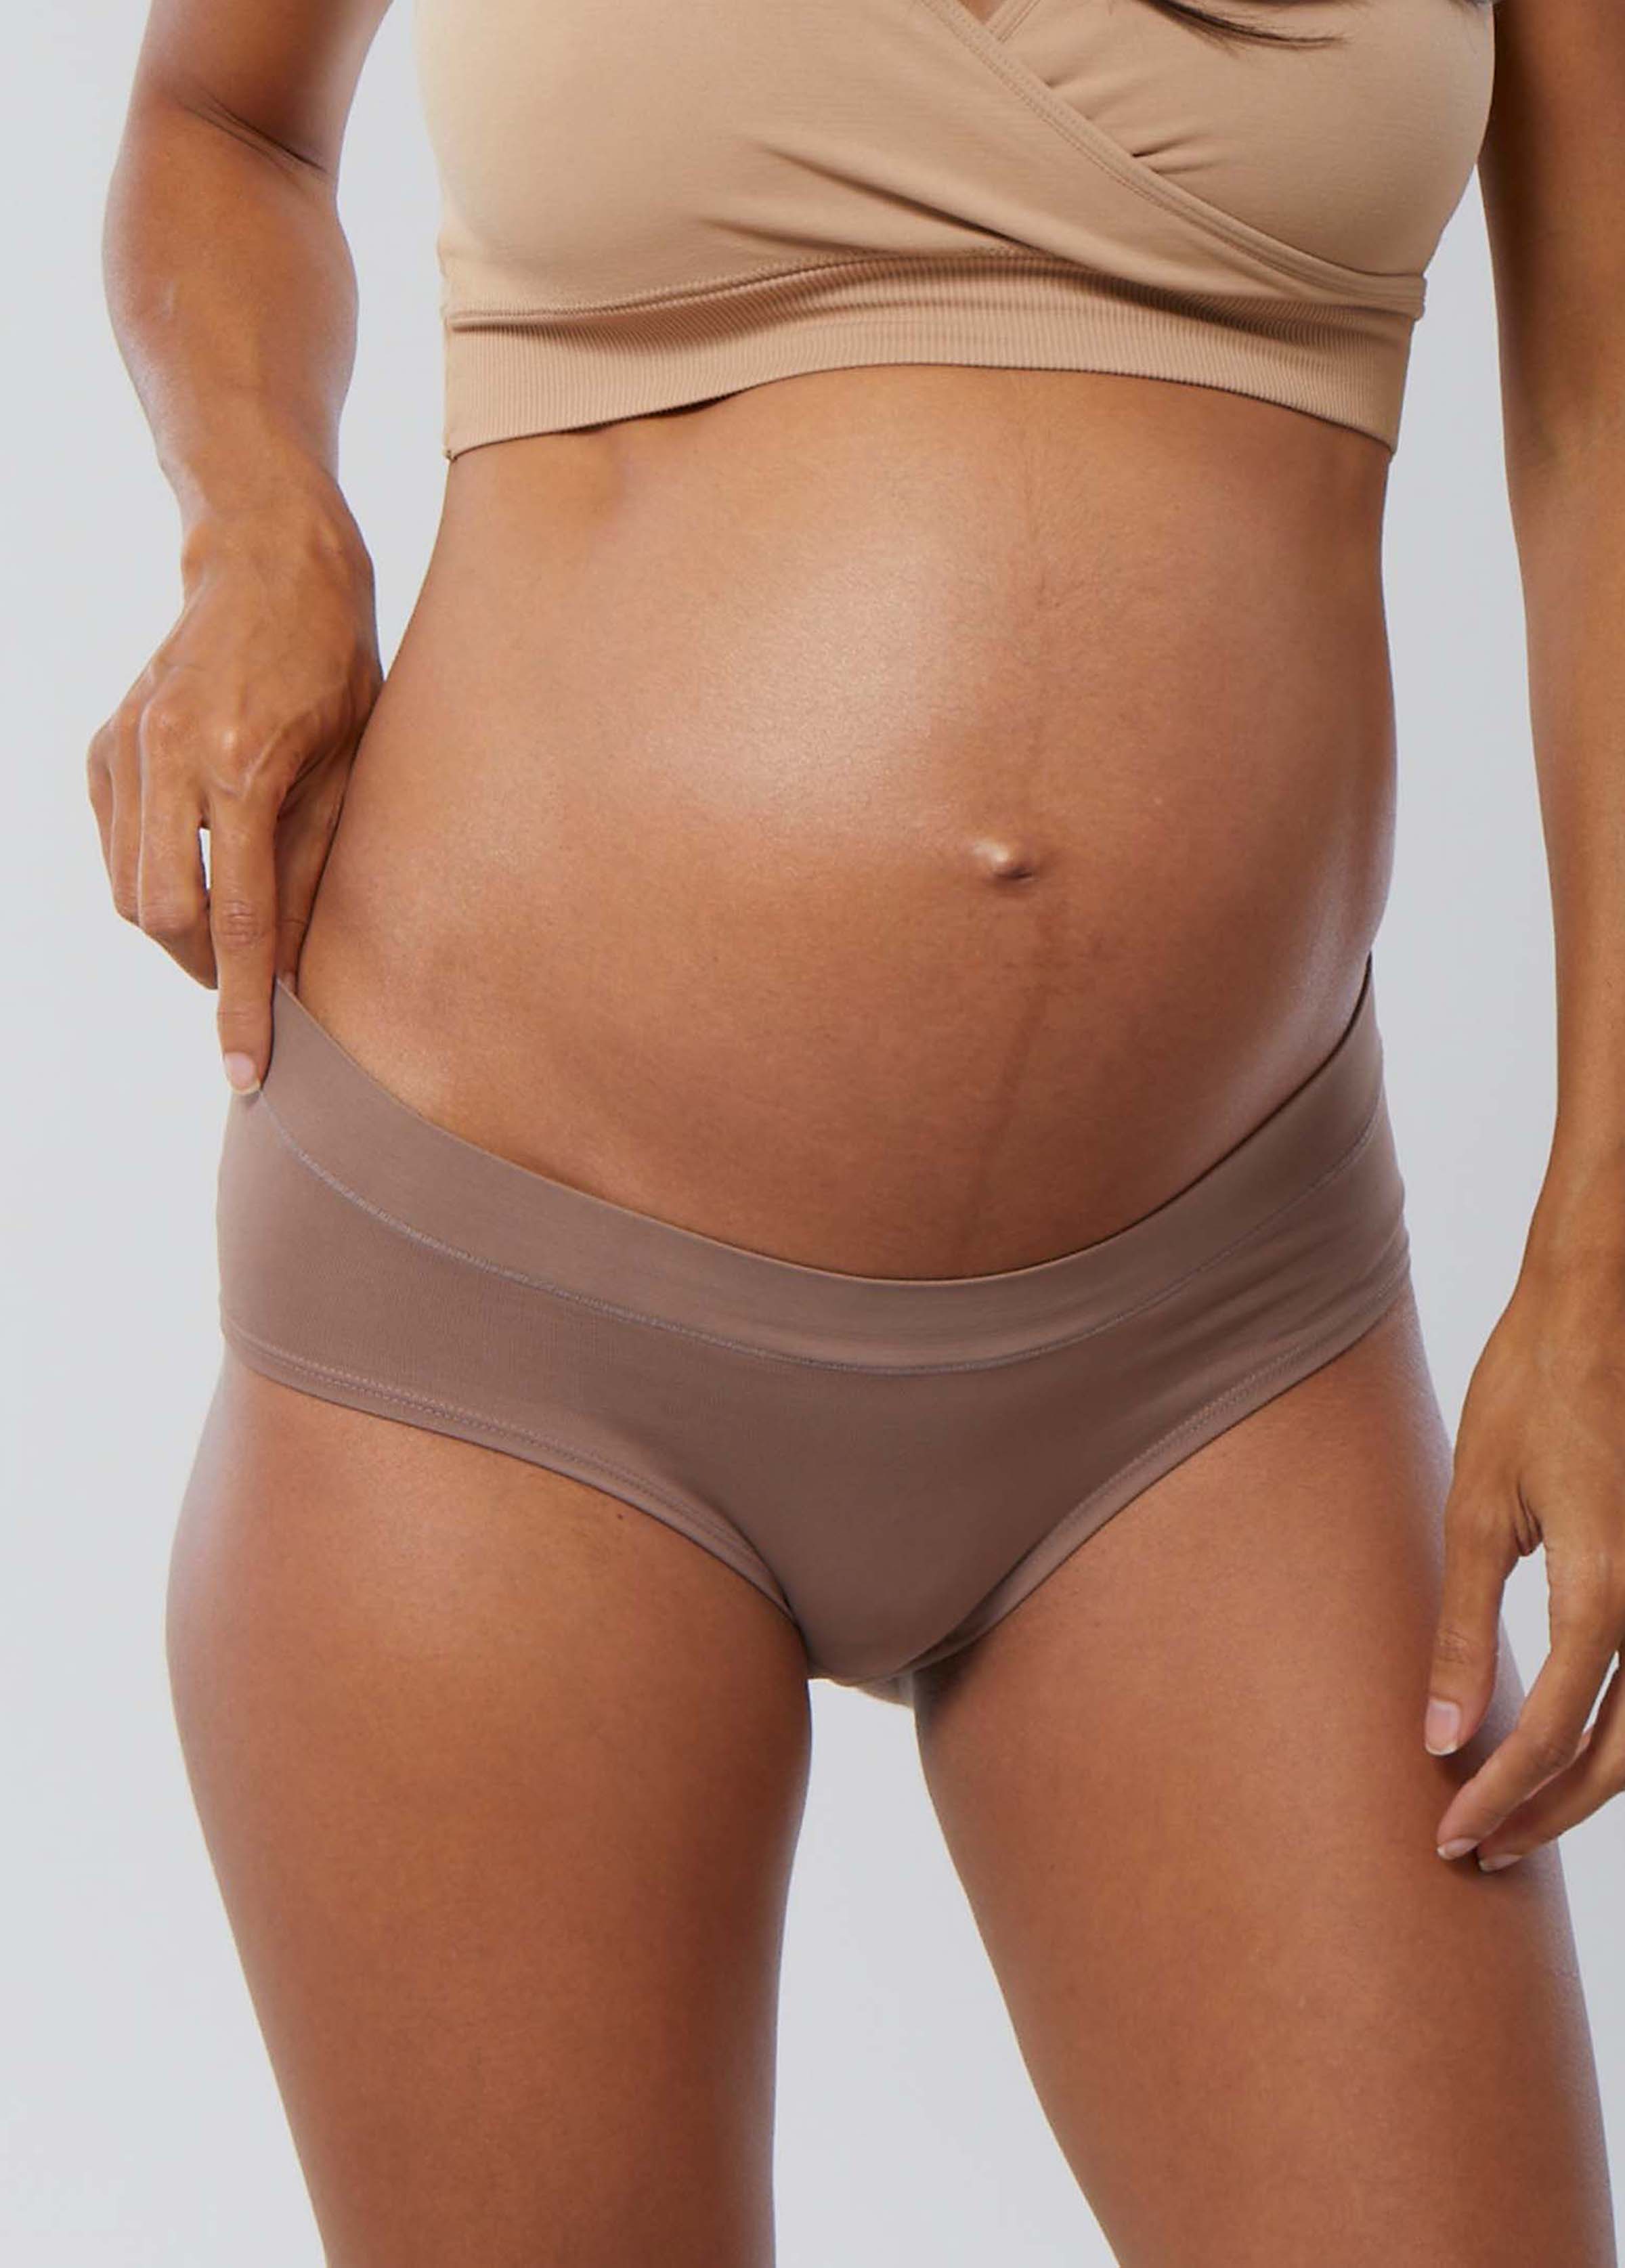 For pregnant and lactating Joones Disposable postpartum panties 2928